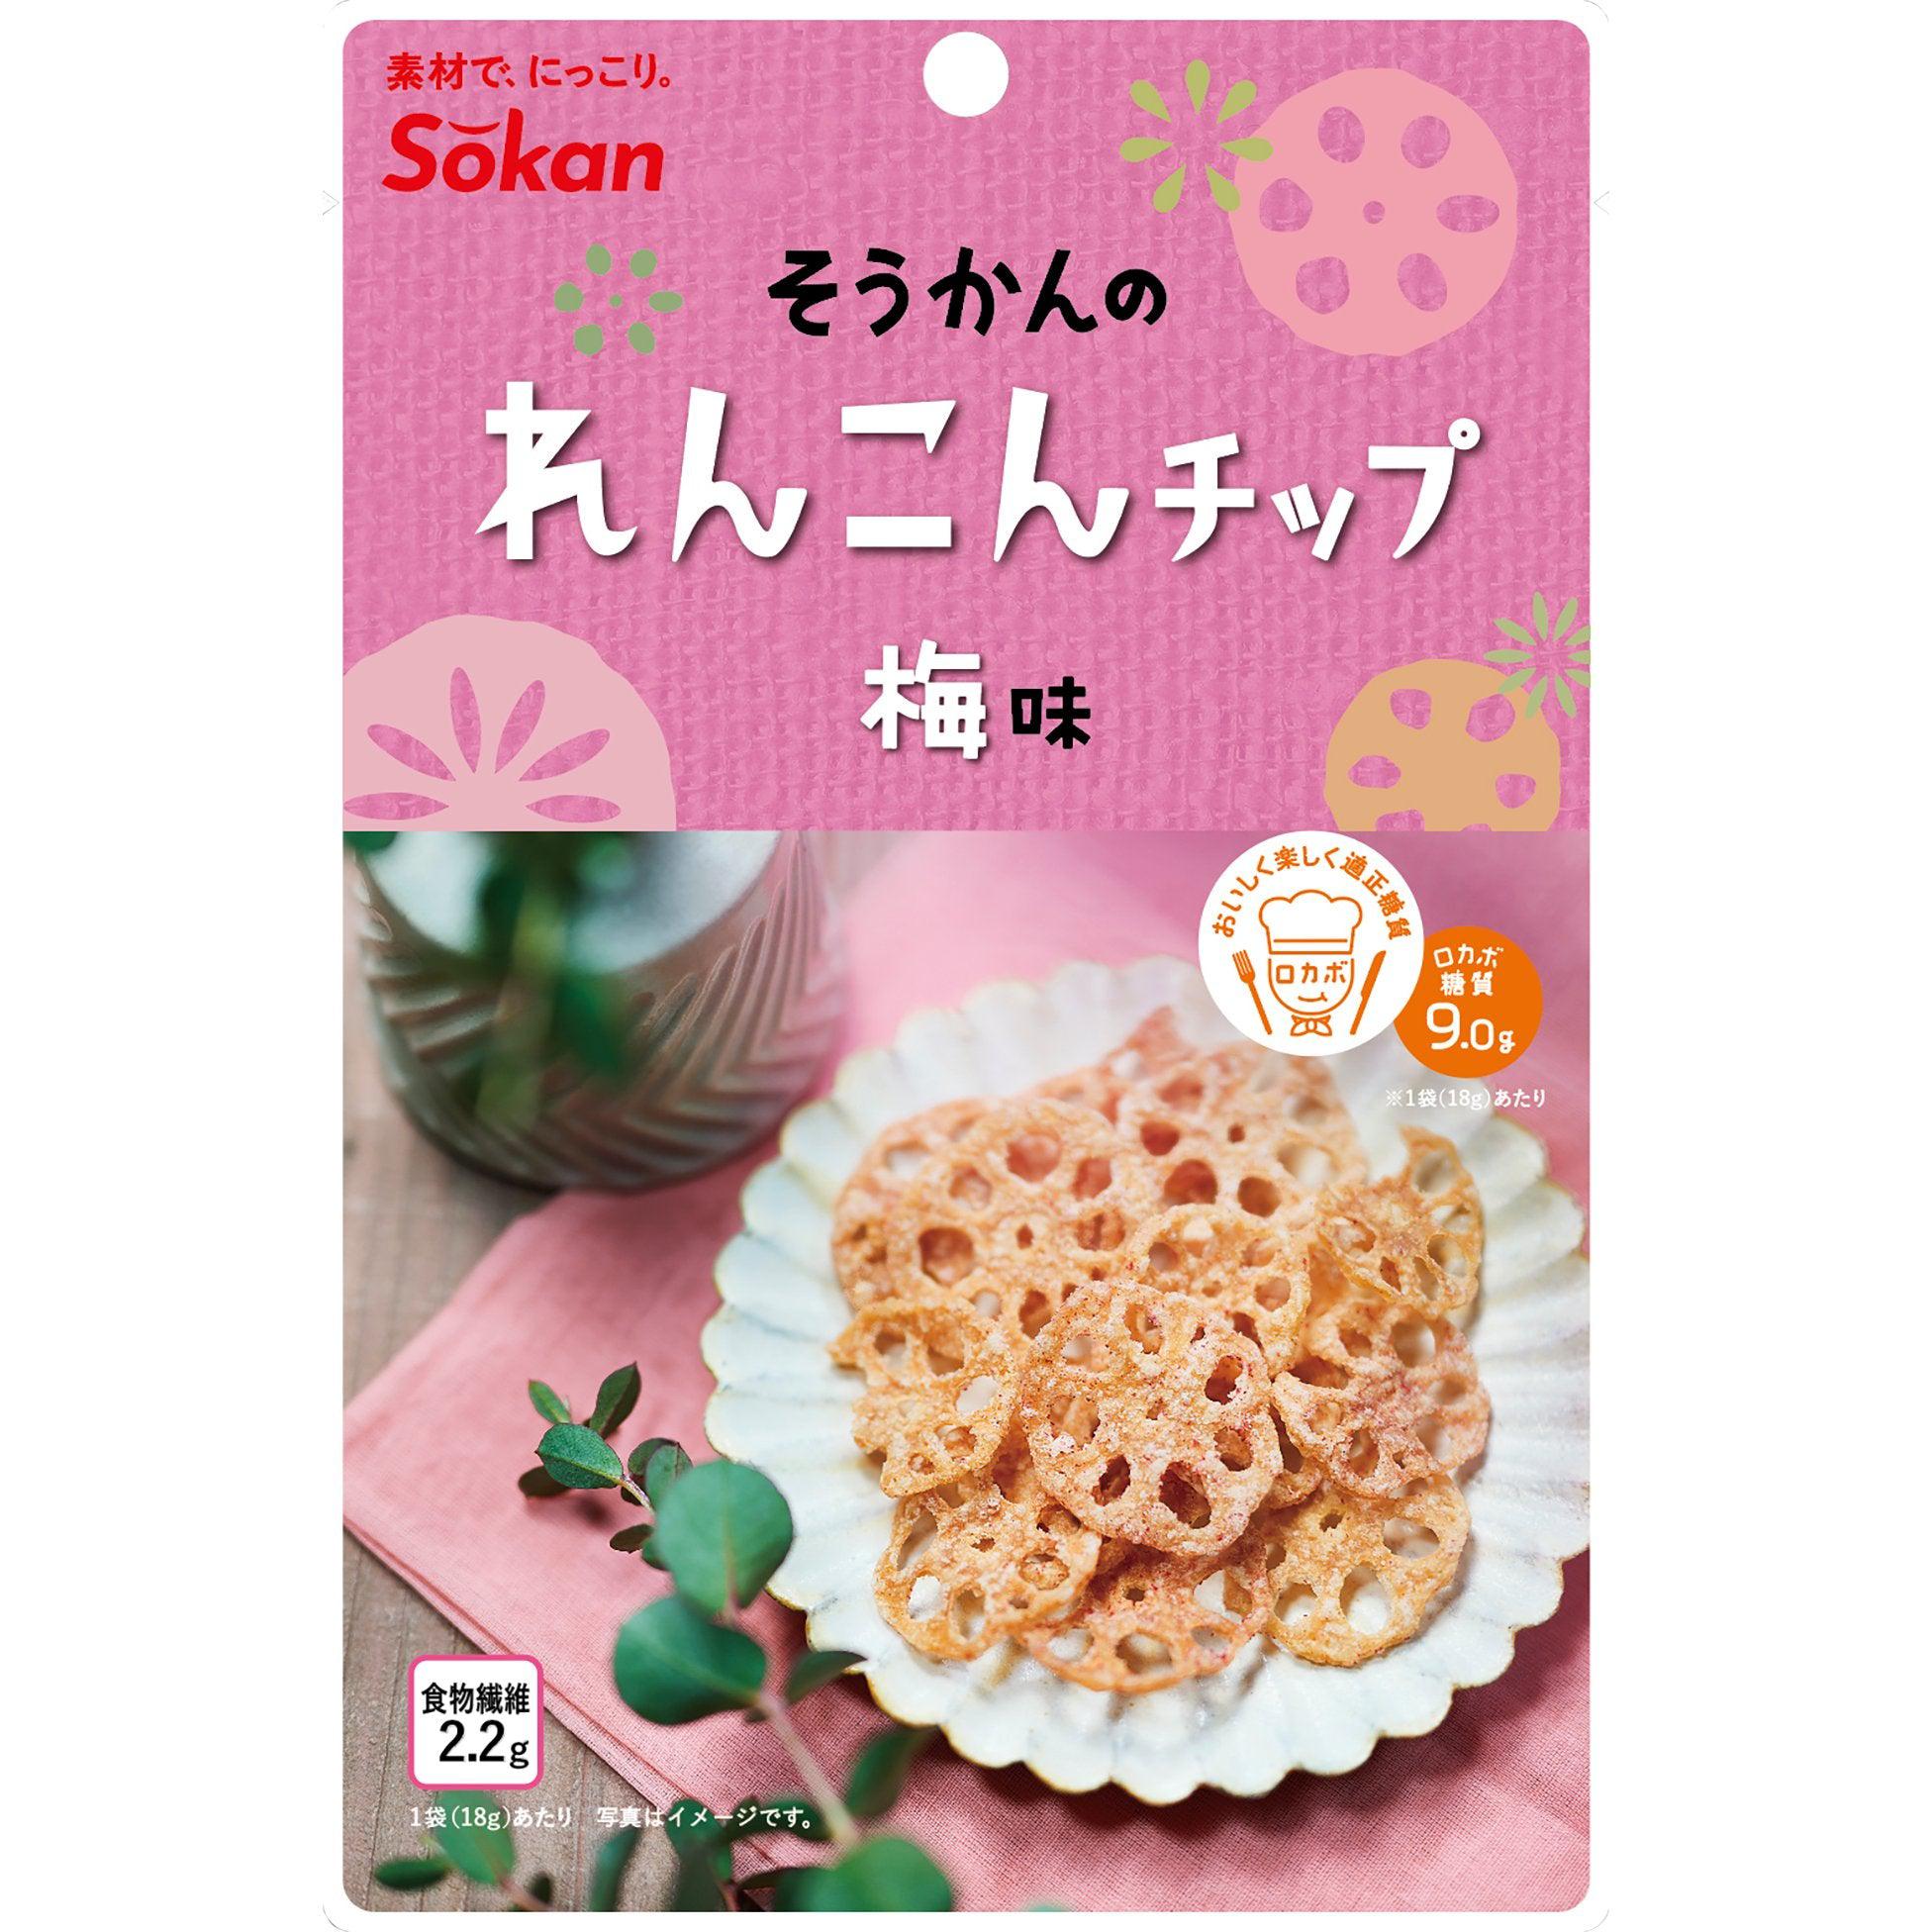 Sokan Ume Renkon Chips Japanese Plum Flavored Lotus Root Chips 18g (Pack of 6)